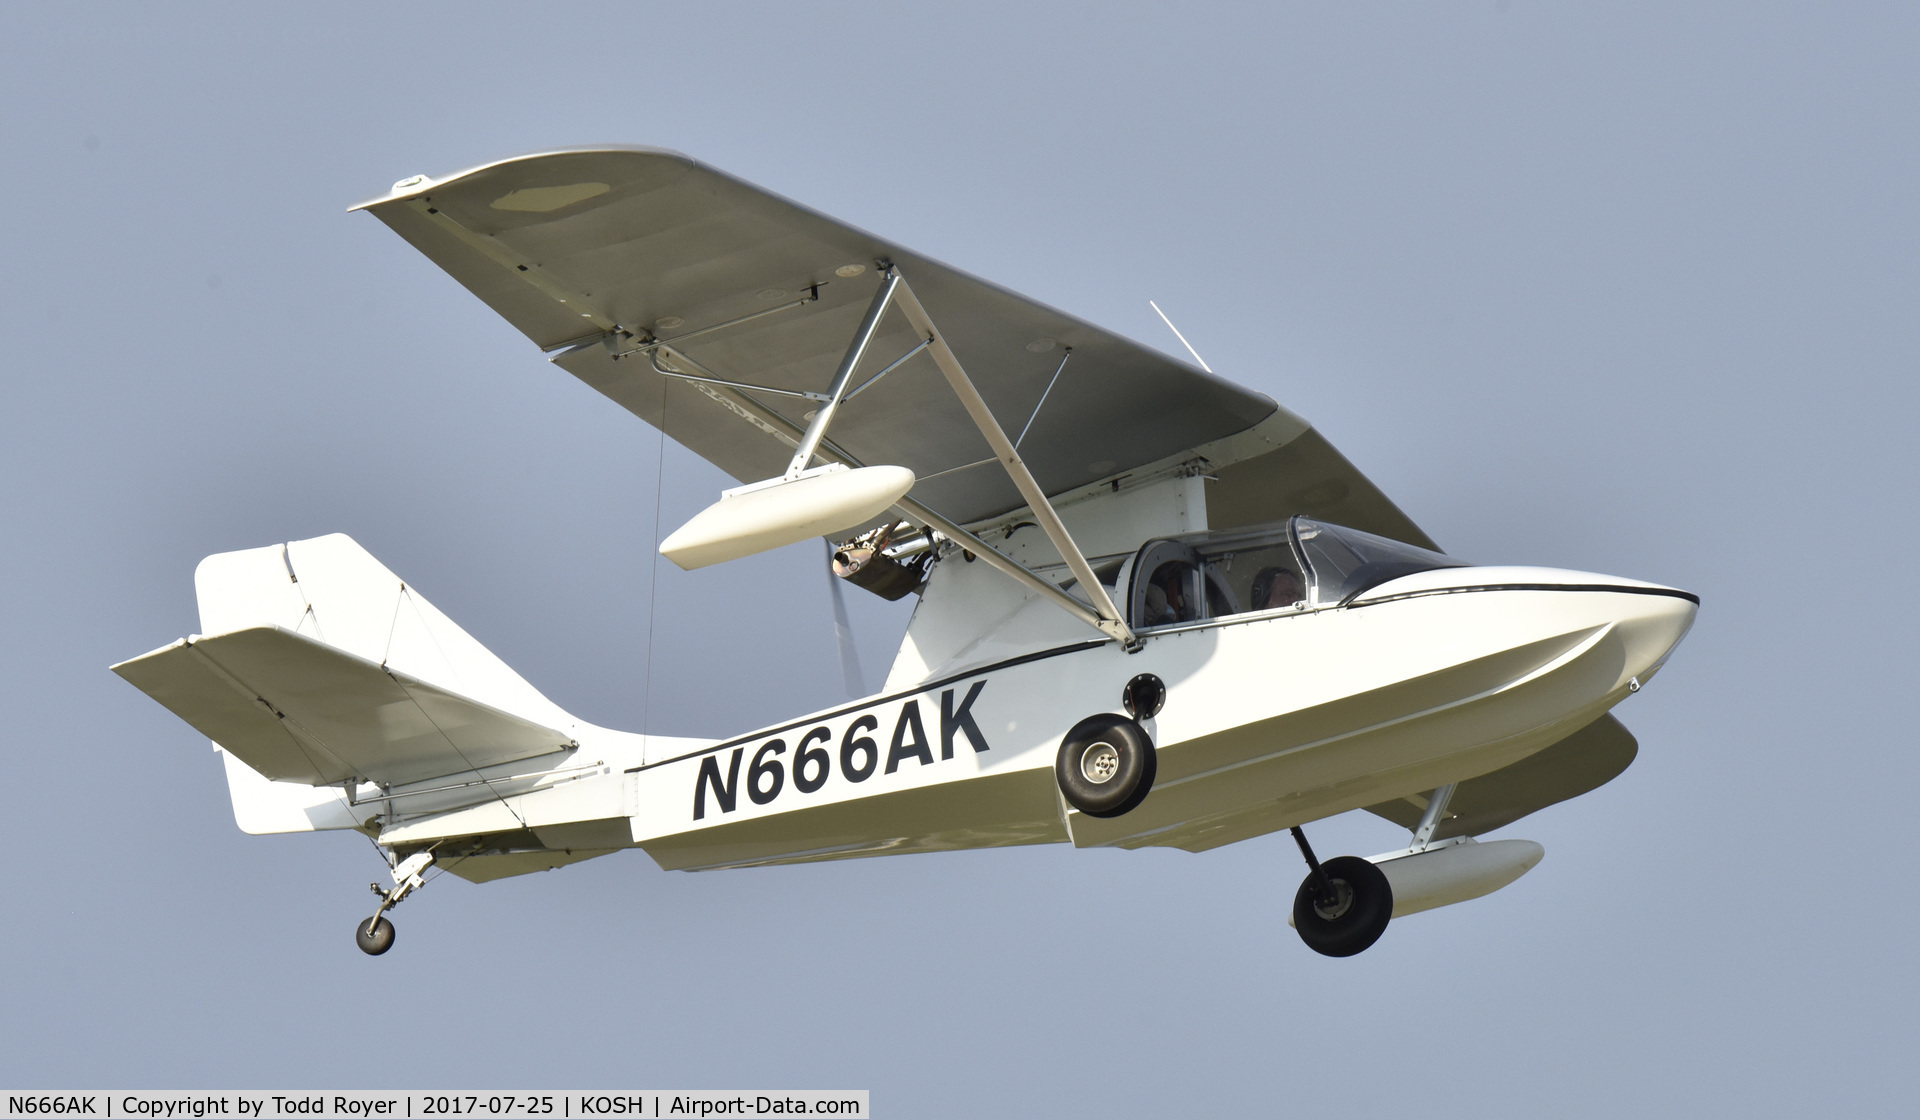 N666AK, 2011 Progressive Aerodyne SeaRey LSX C/N 1LK497C, Airventure 2017